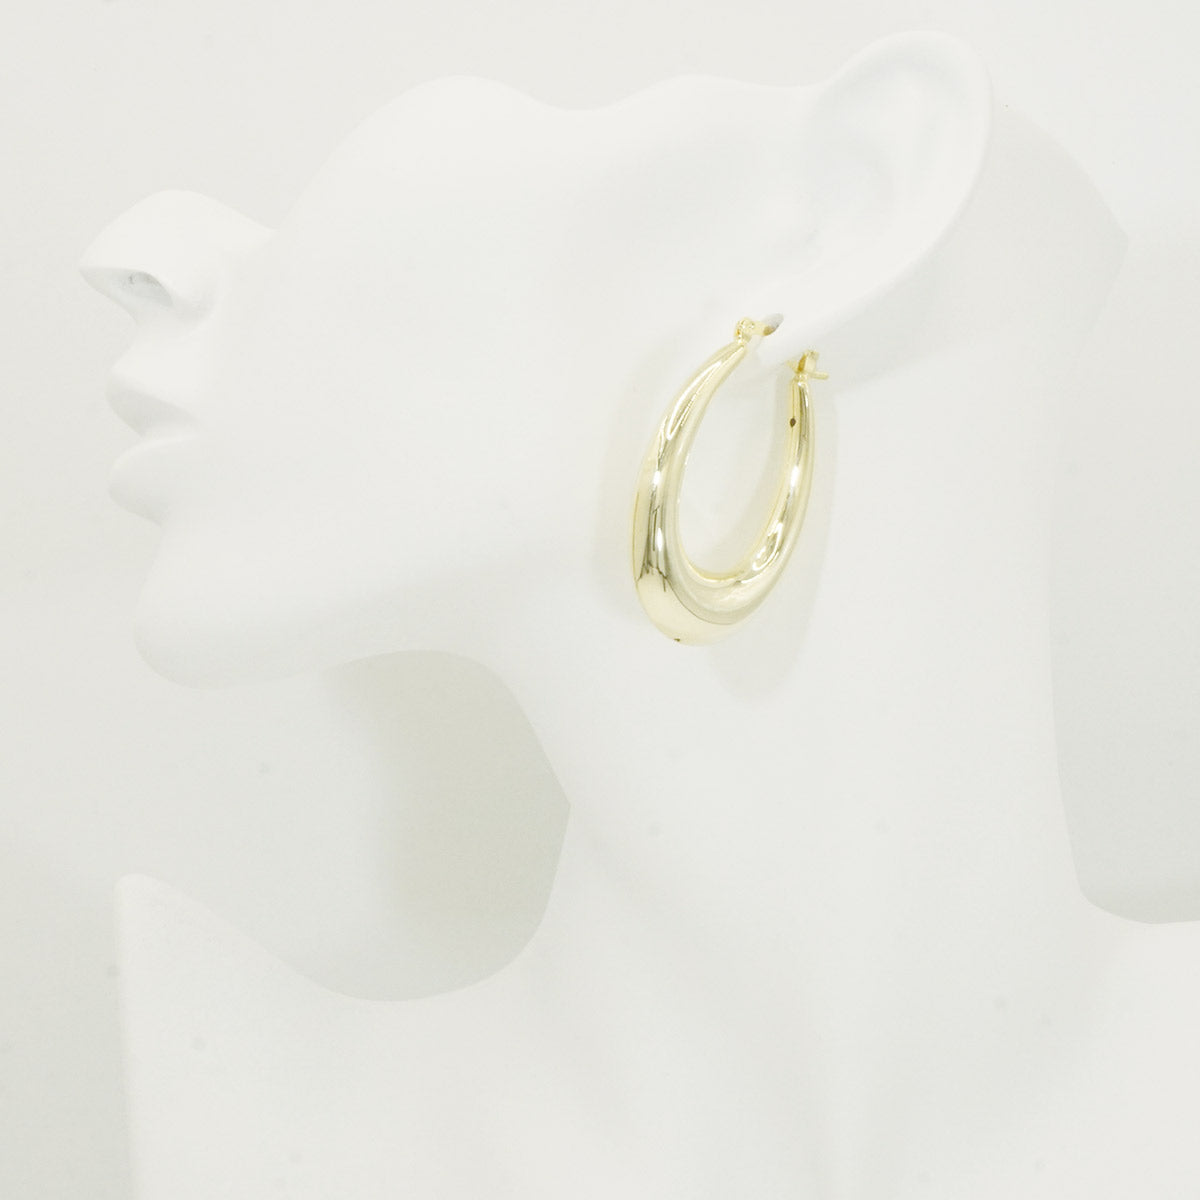 Oval Chunky Big Gold Hoop Earrings